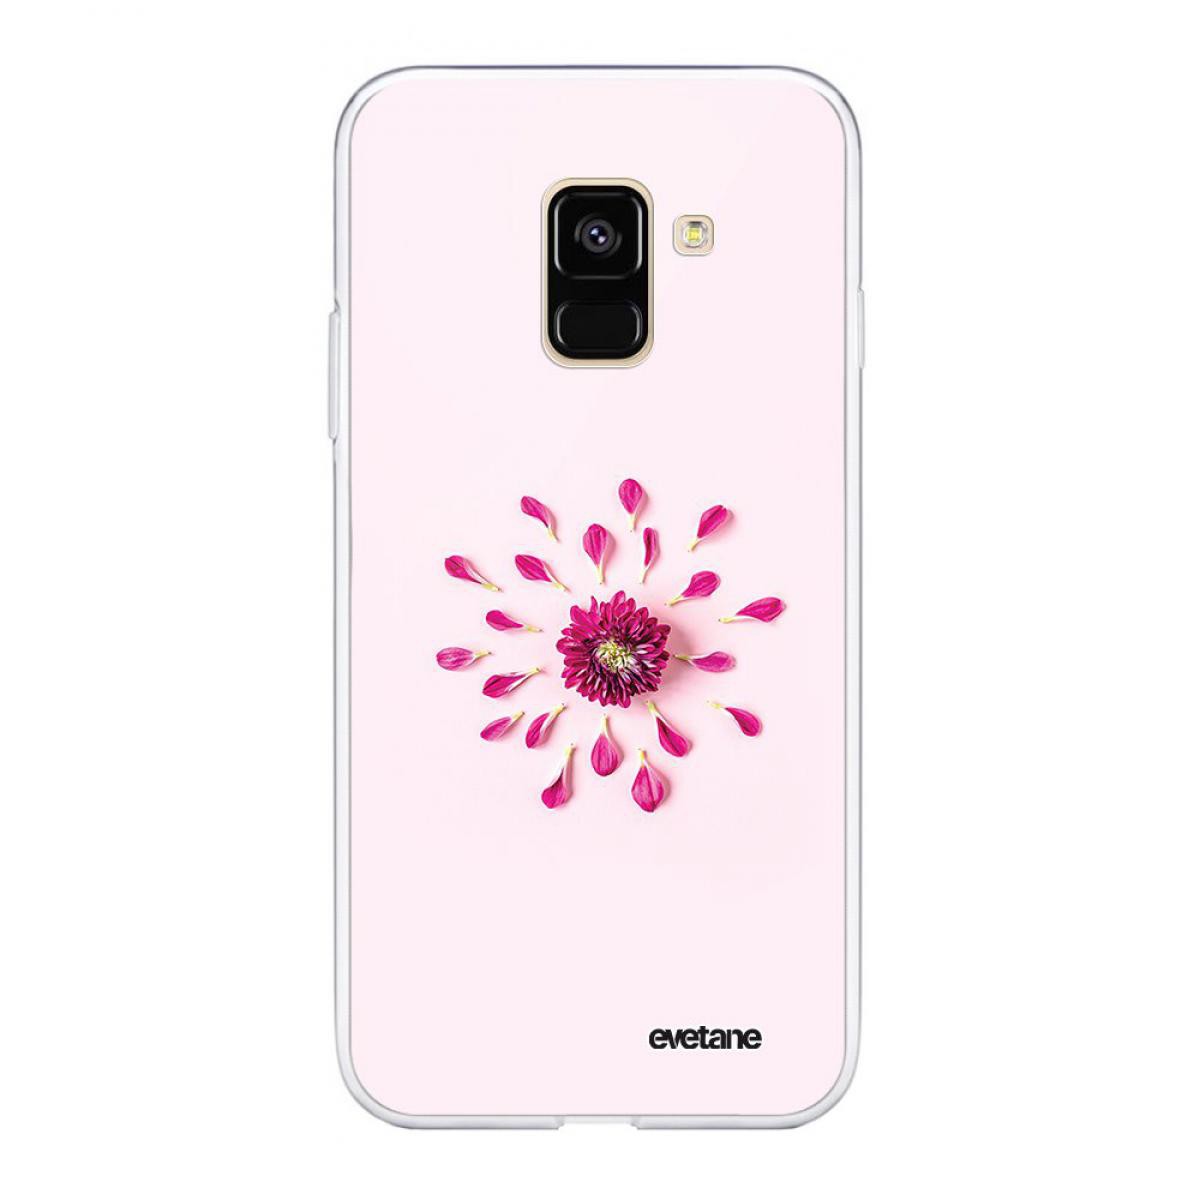 Evetane - Coque Samsung Galaxy A8 2018 souple Fleur Rose Fushia Motif Ecriture Tendance Evetane. - Coque, étui smartphone